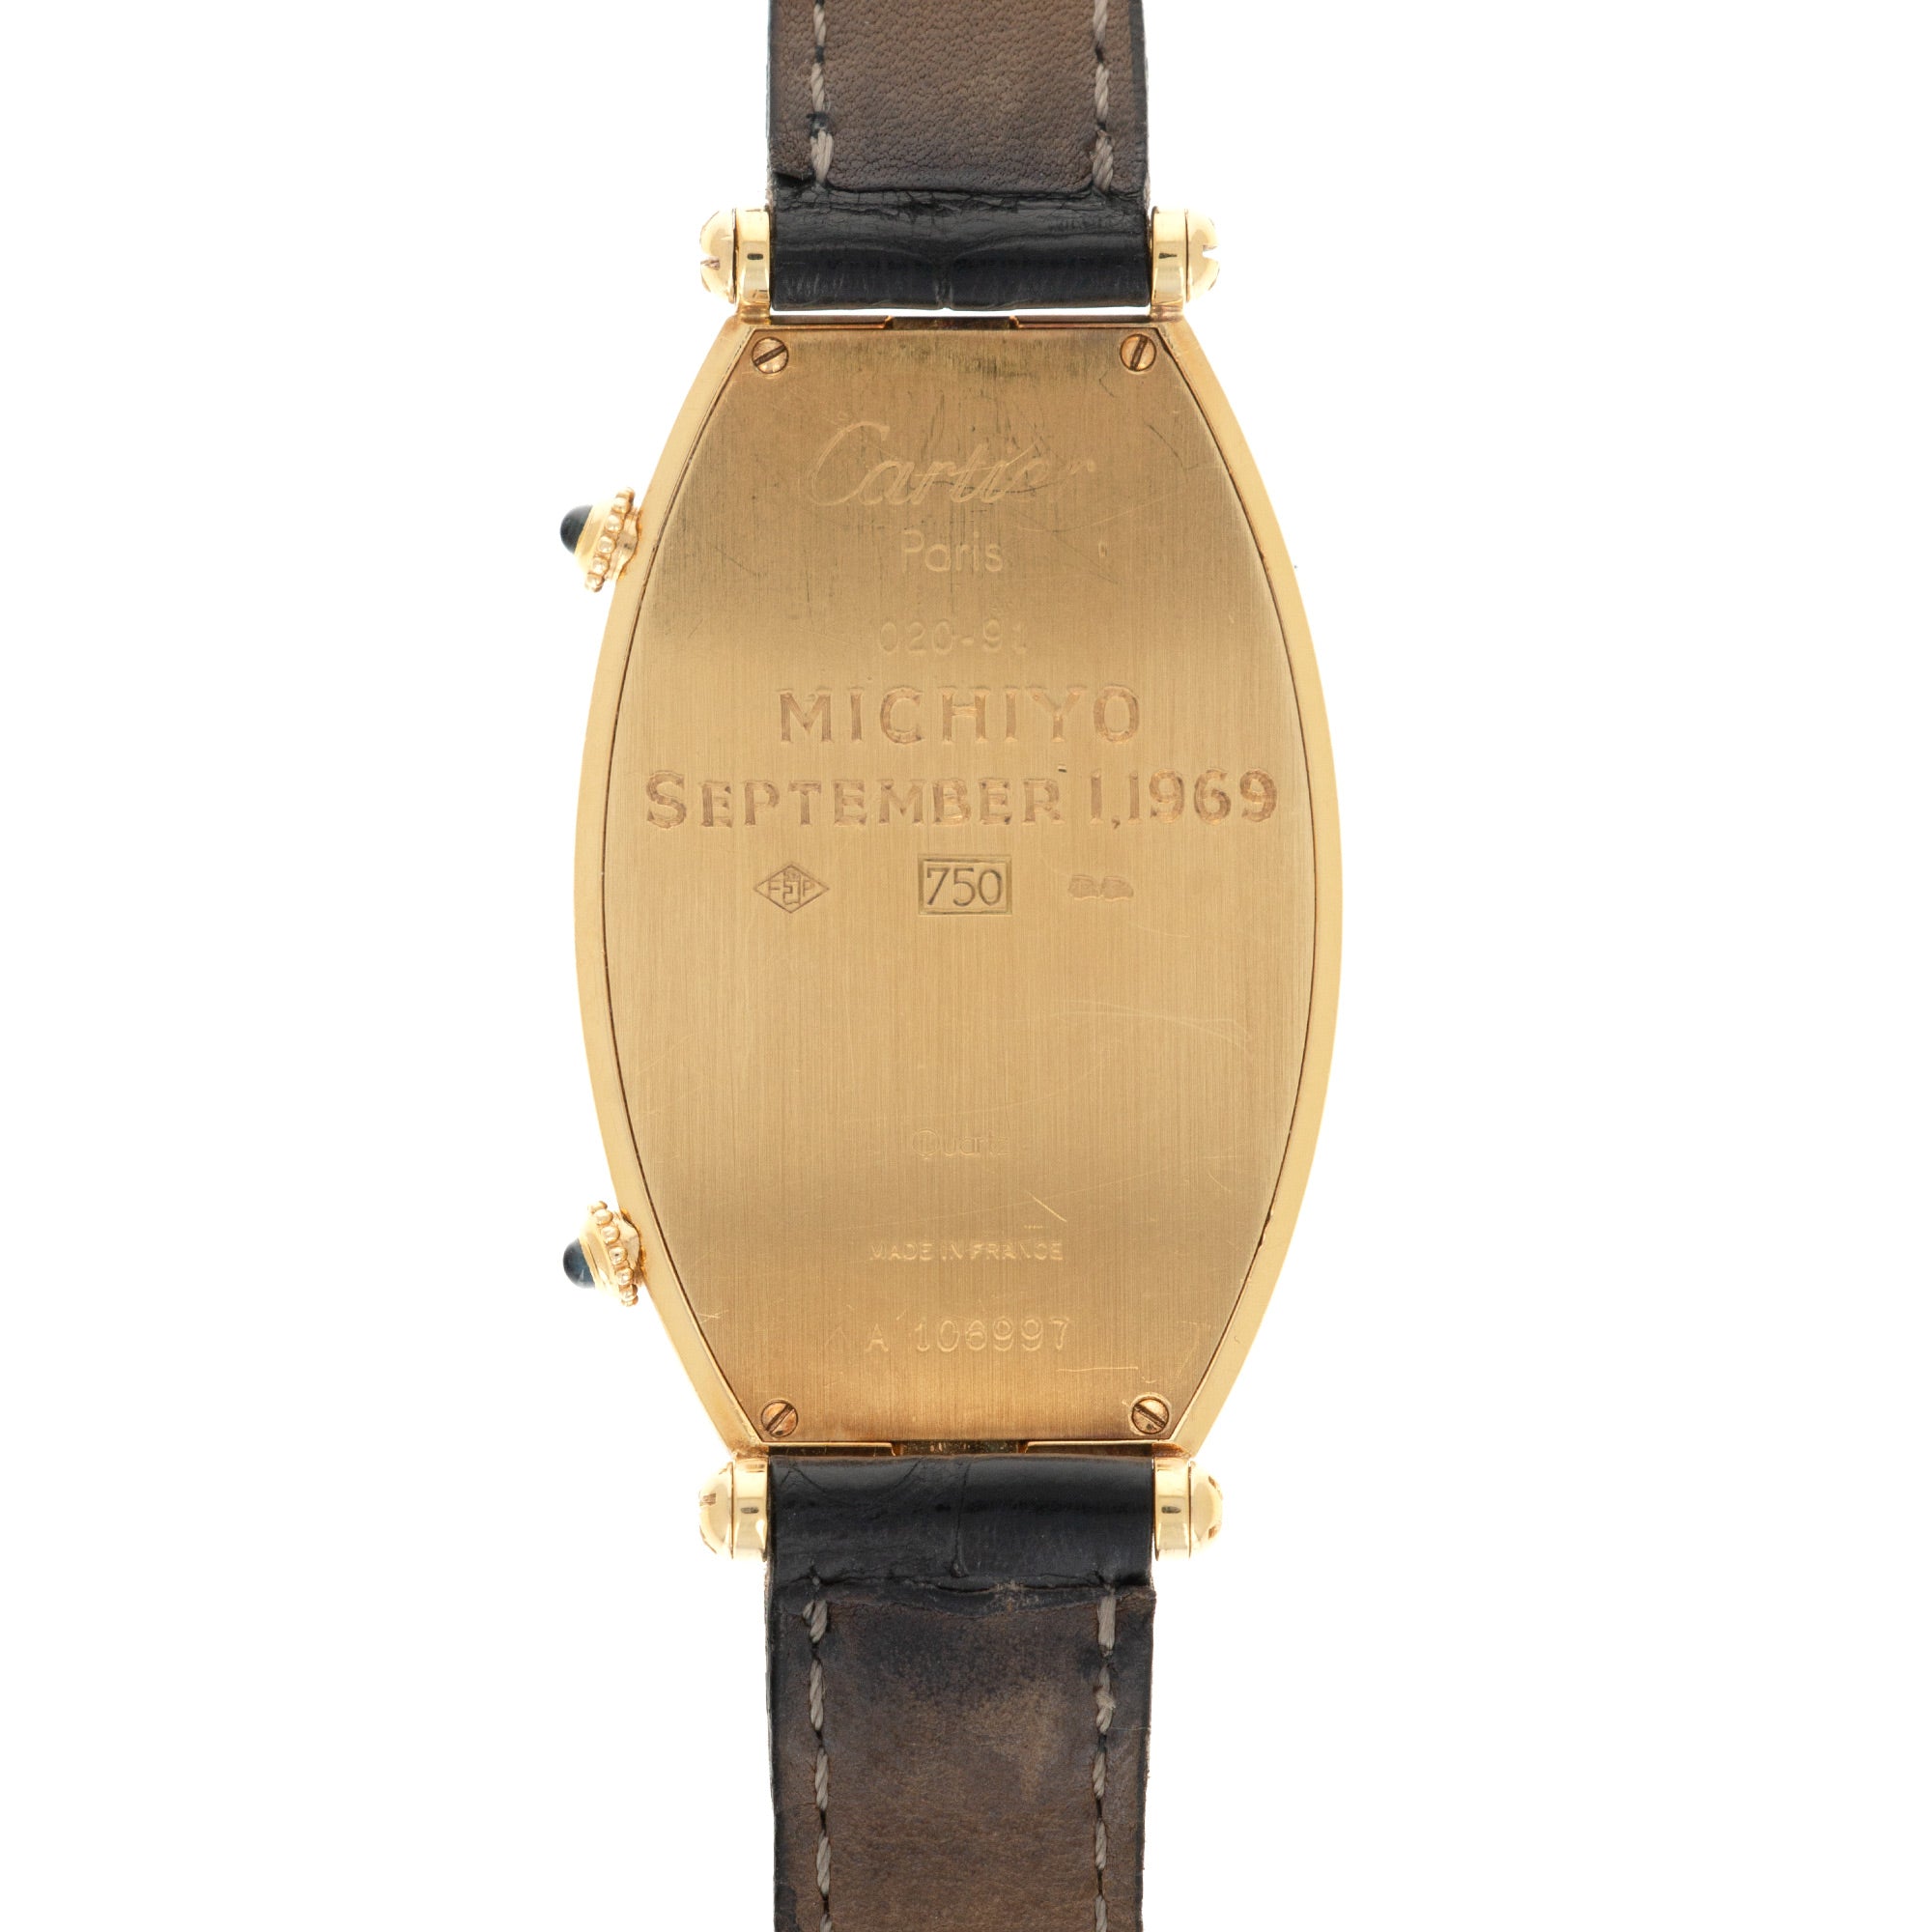 Cartier - Cartier Yellow Gold Tonneau Dual Time Watch - The Keystone Watches